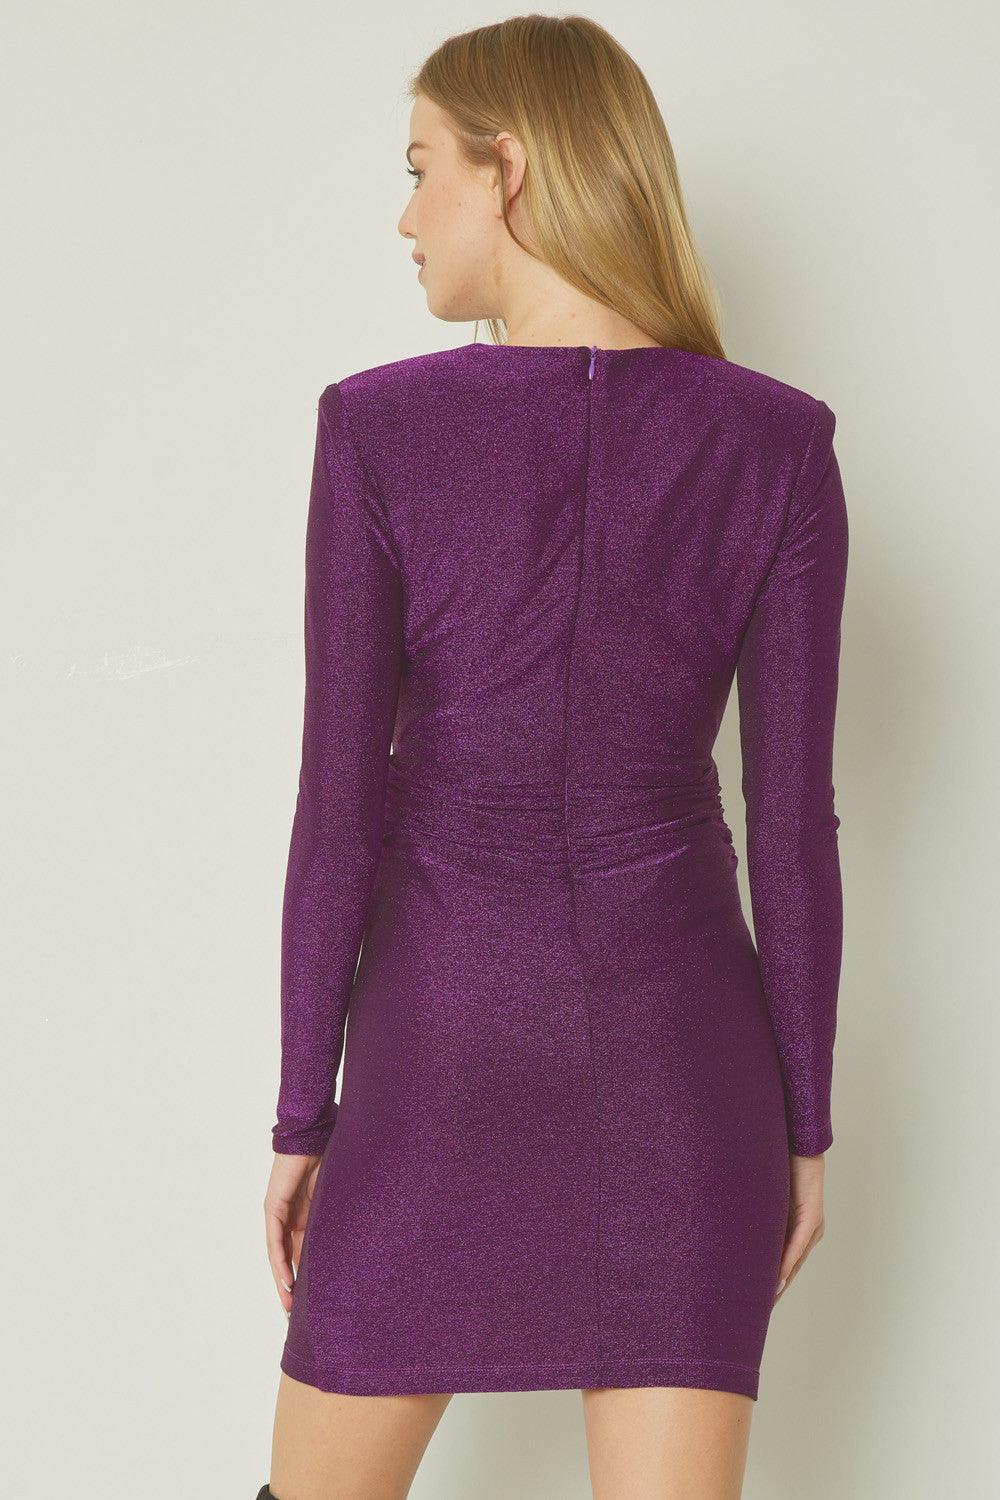 shimmer long sleeve v neck dress - RK Collections Boutique